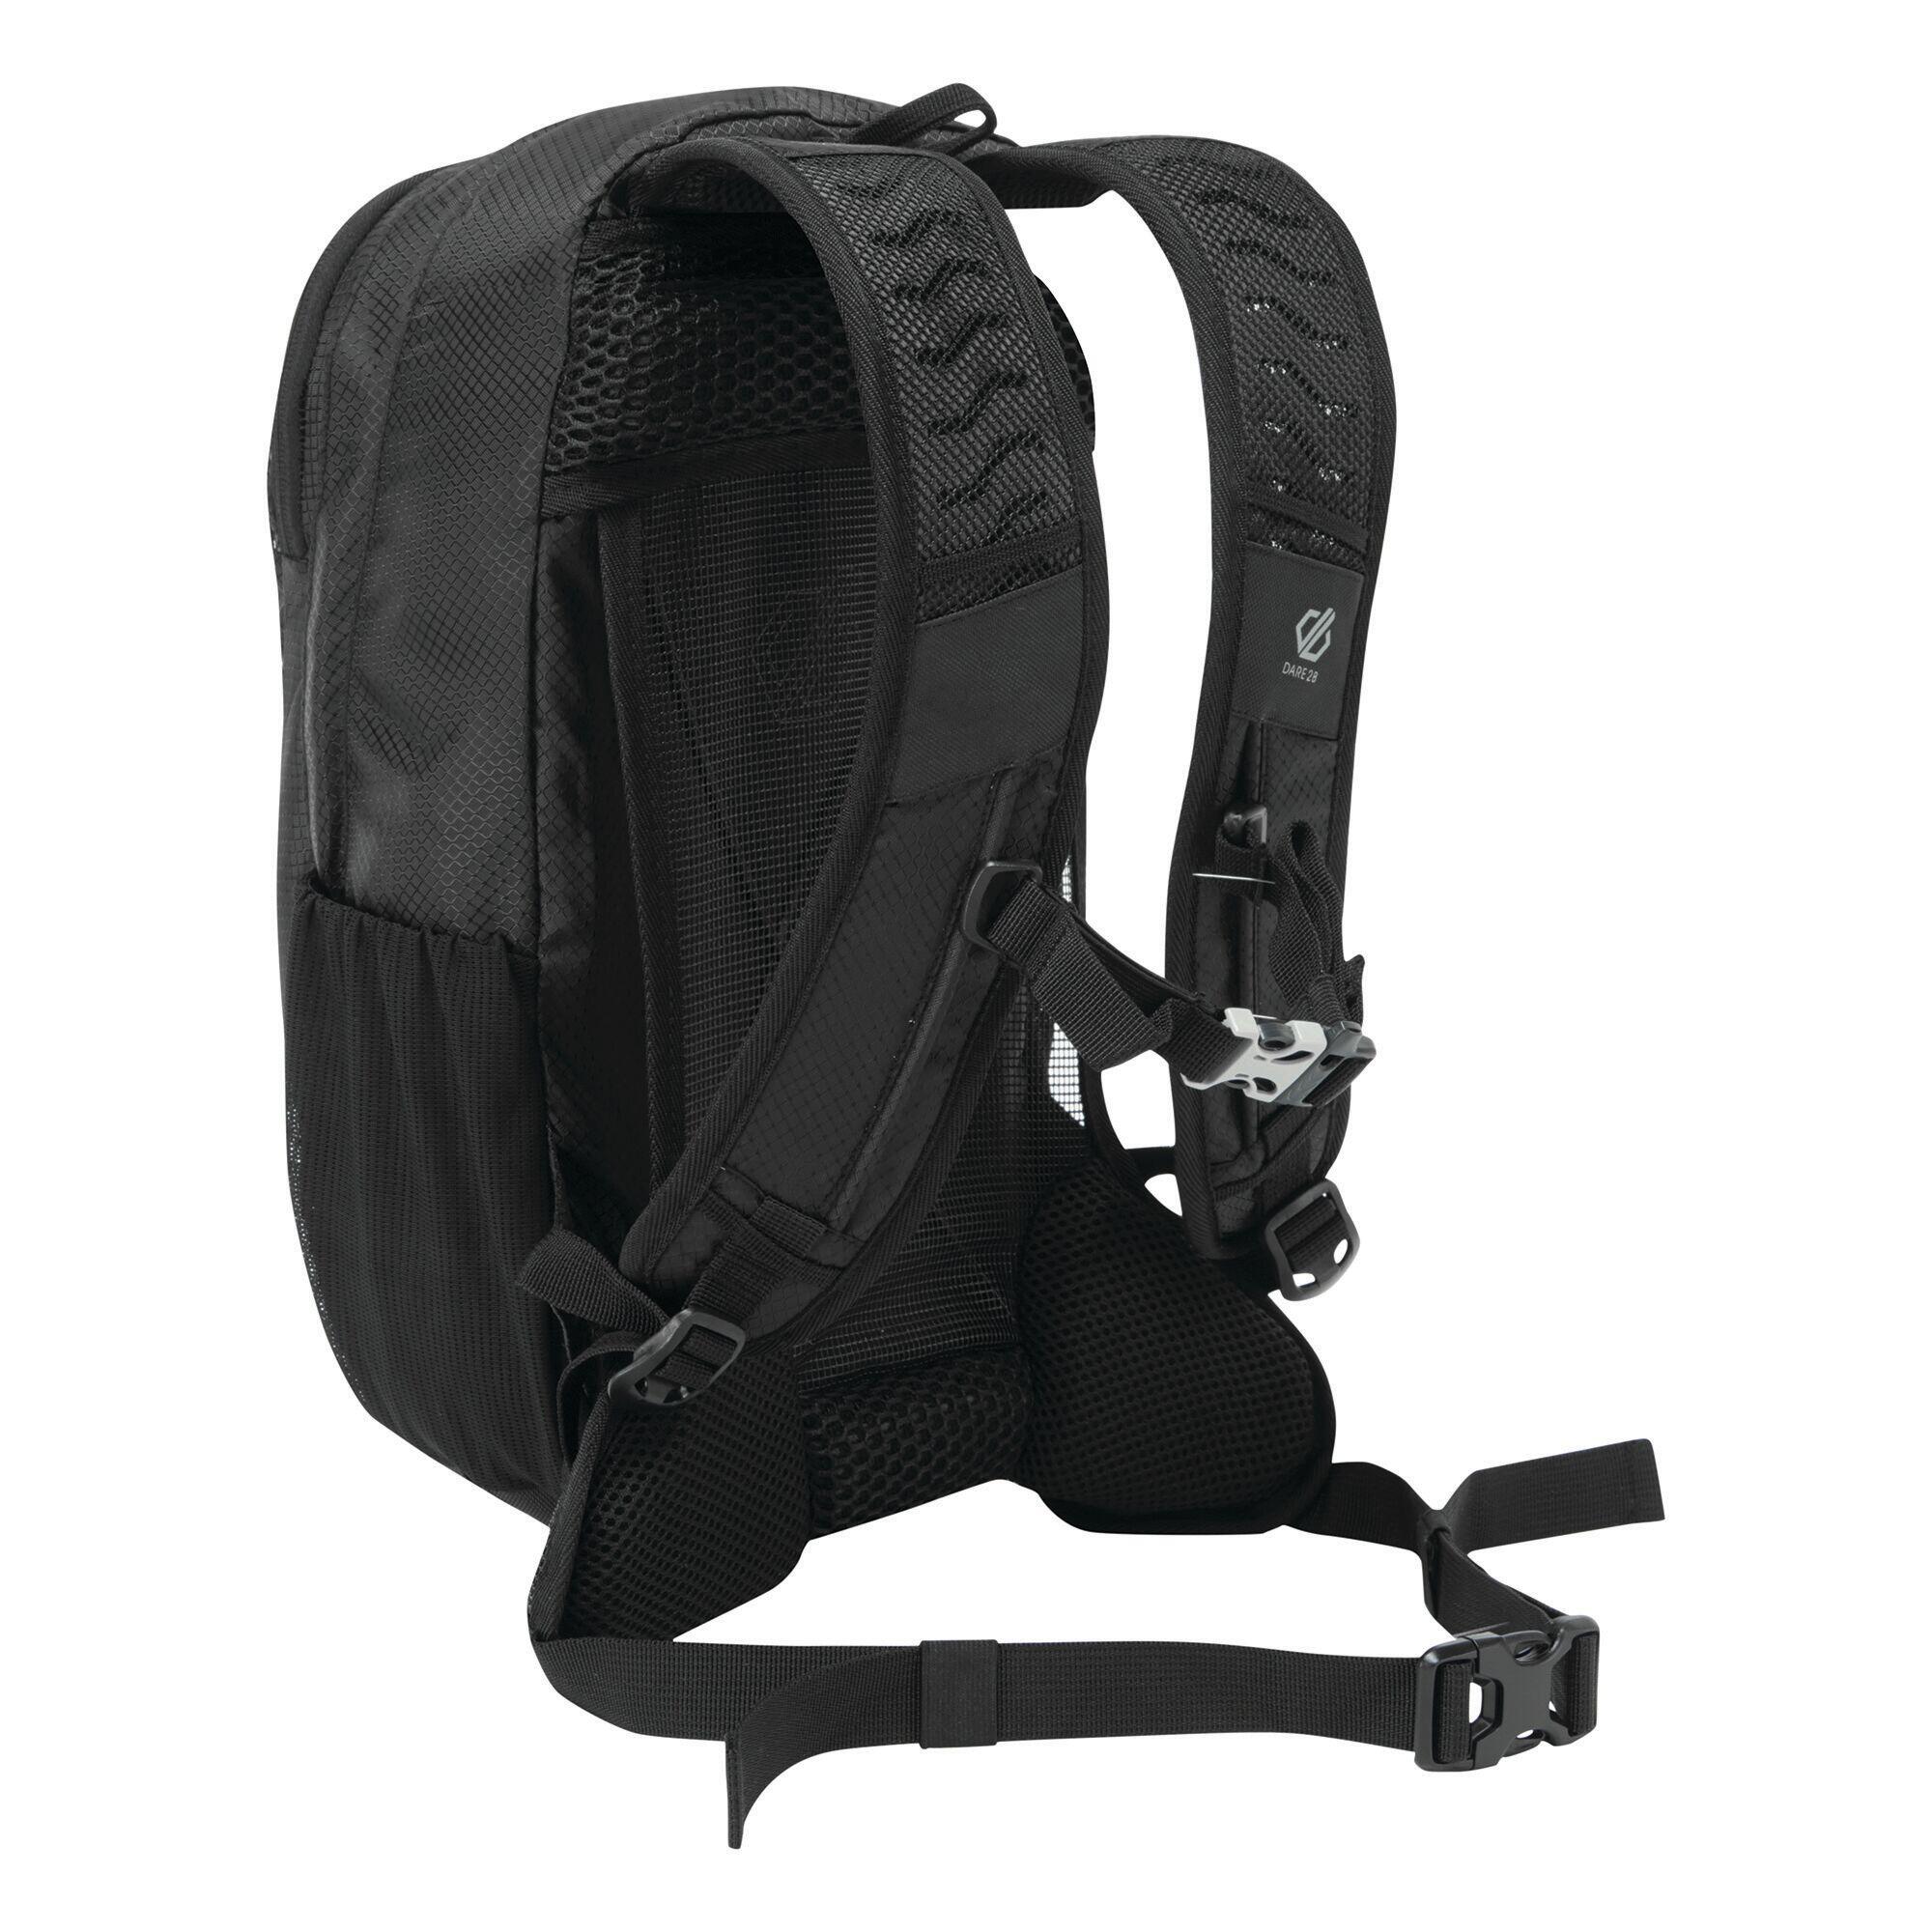 Vite Air Adults' Hiking 15 Litre Backpack - Black/White 4/4